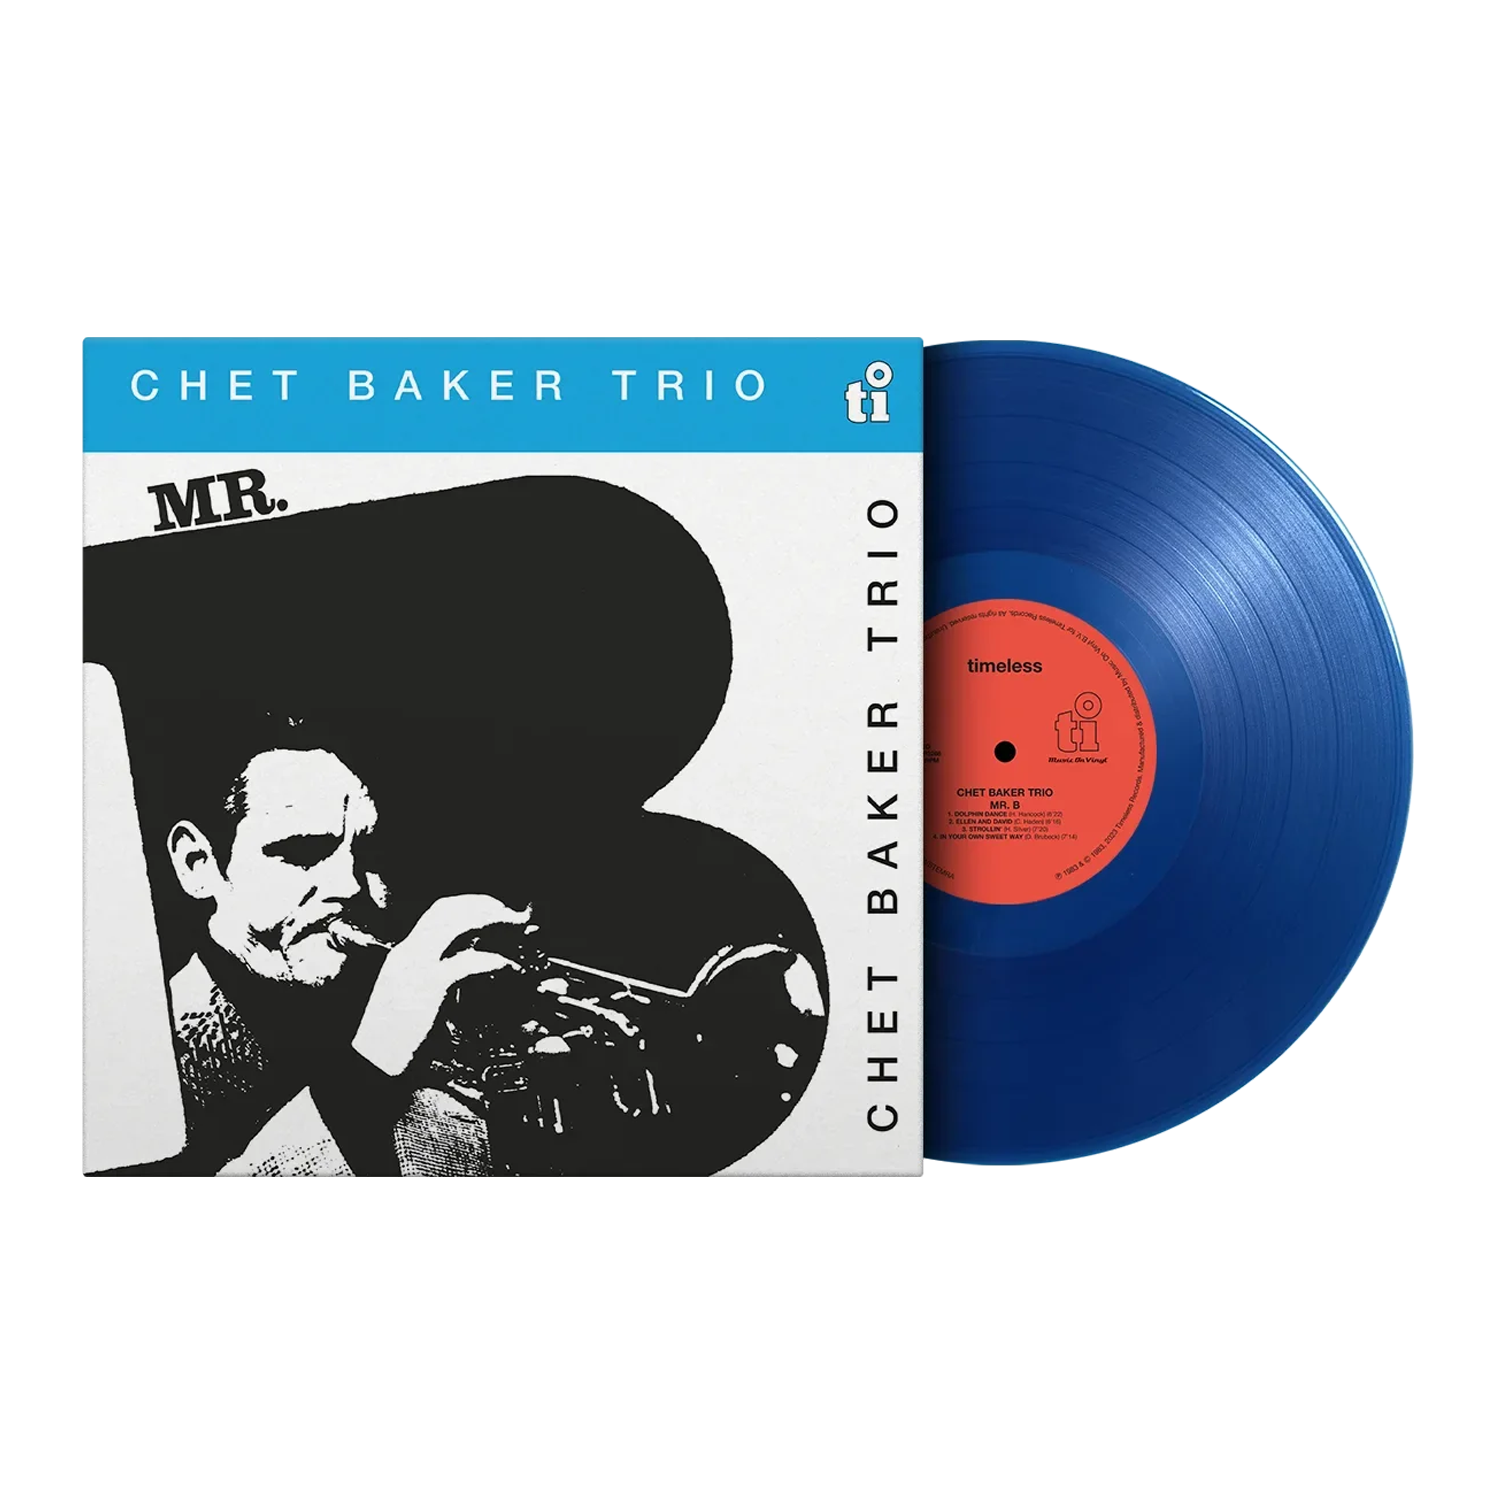 Chet Baker Trio - Mr.B: Limited Transparent Blue Vinyl LP